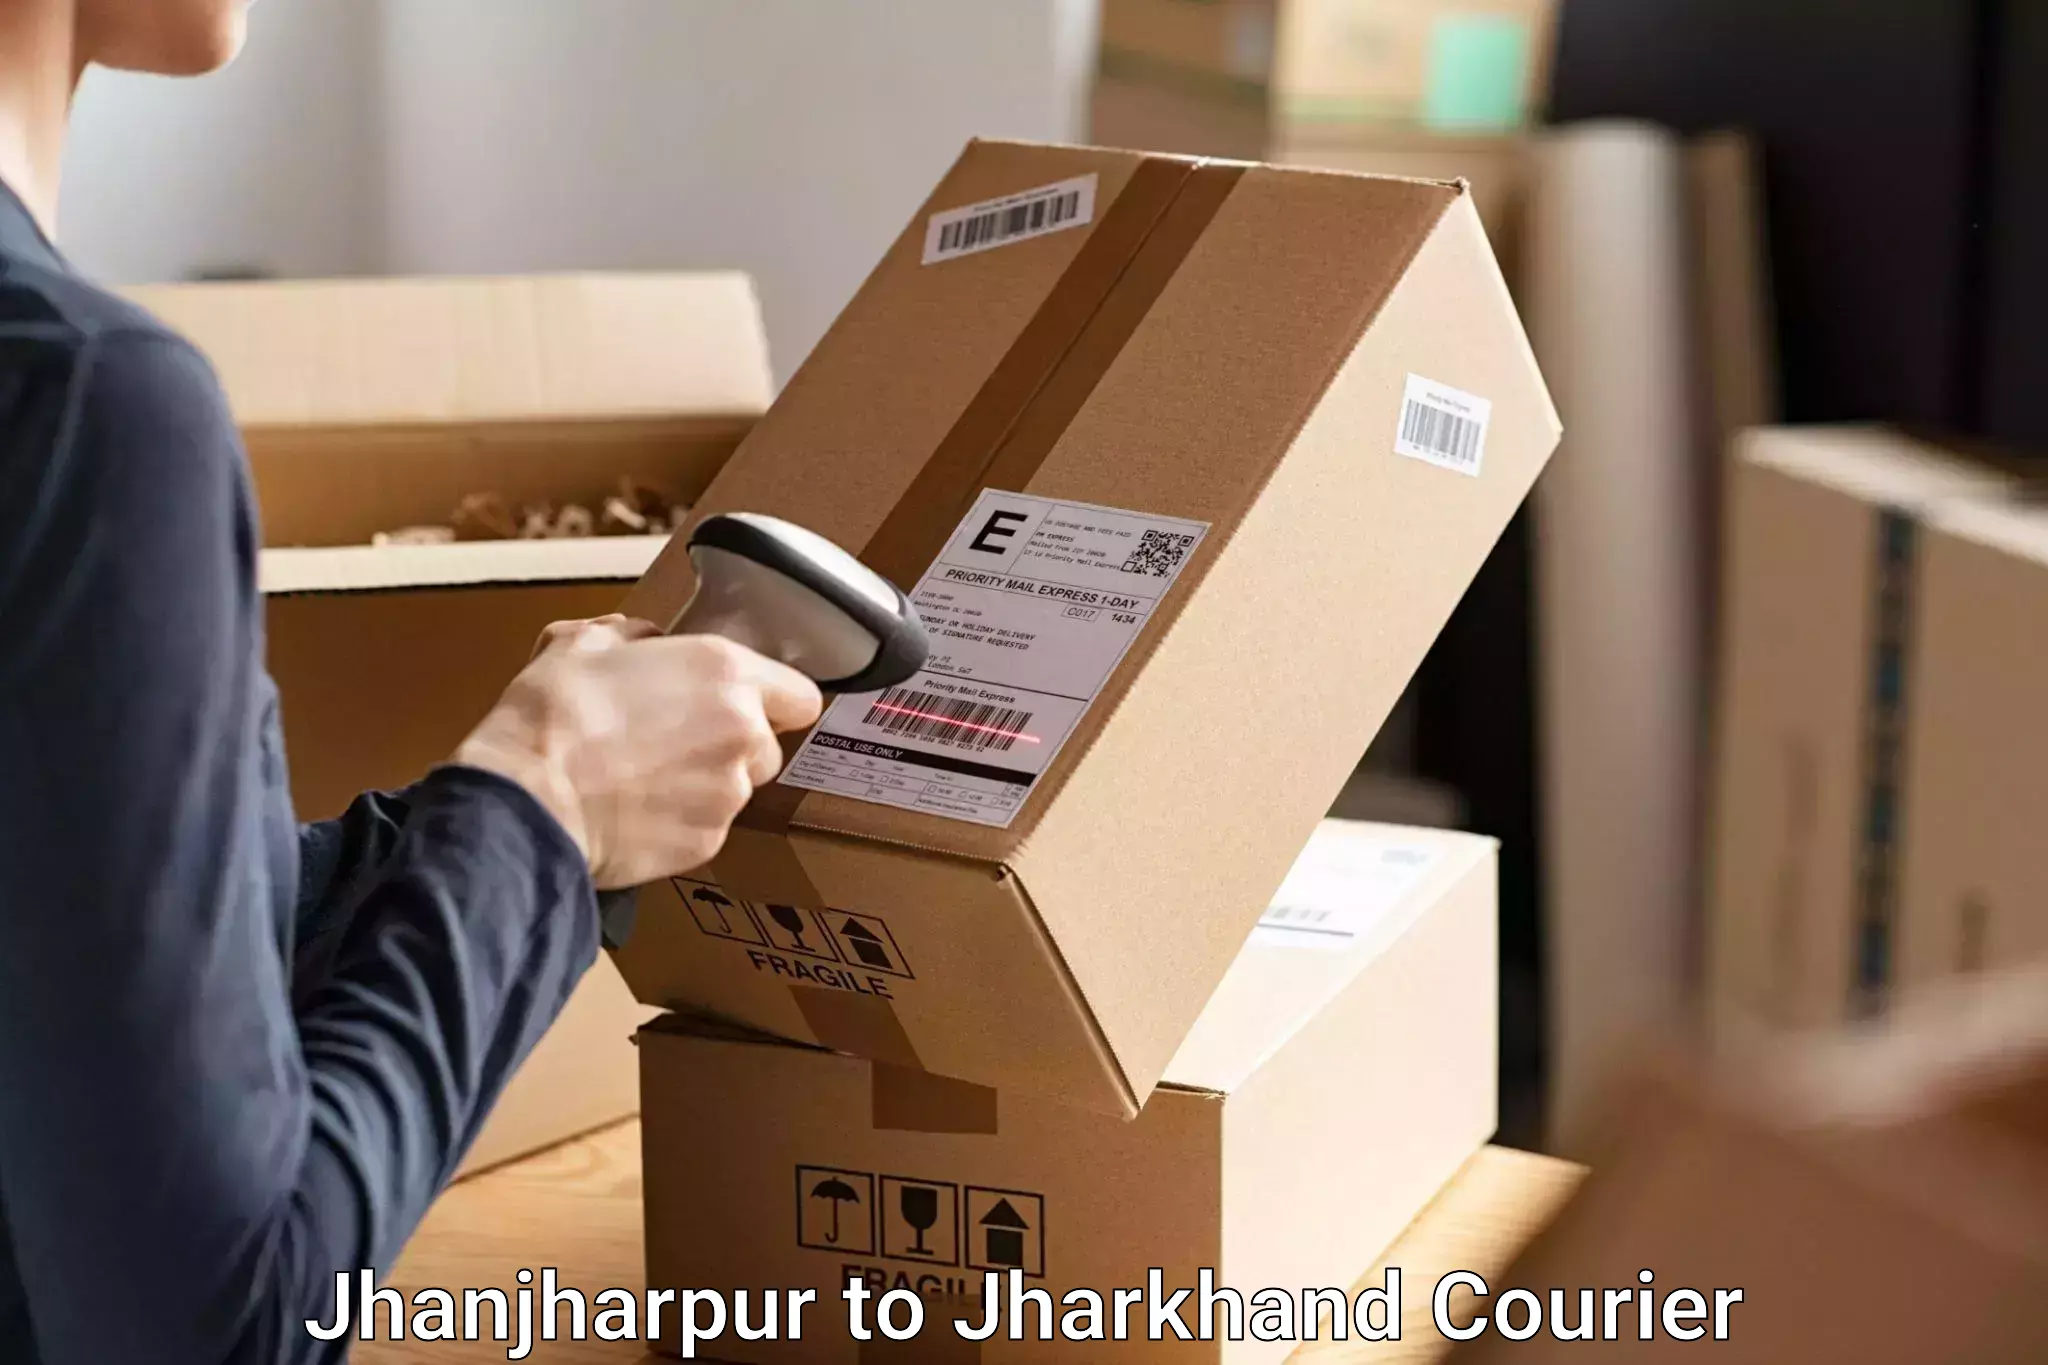 Baggage transport scheduler Jhanjharpur to Dhalbhumgarh